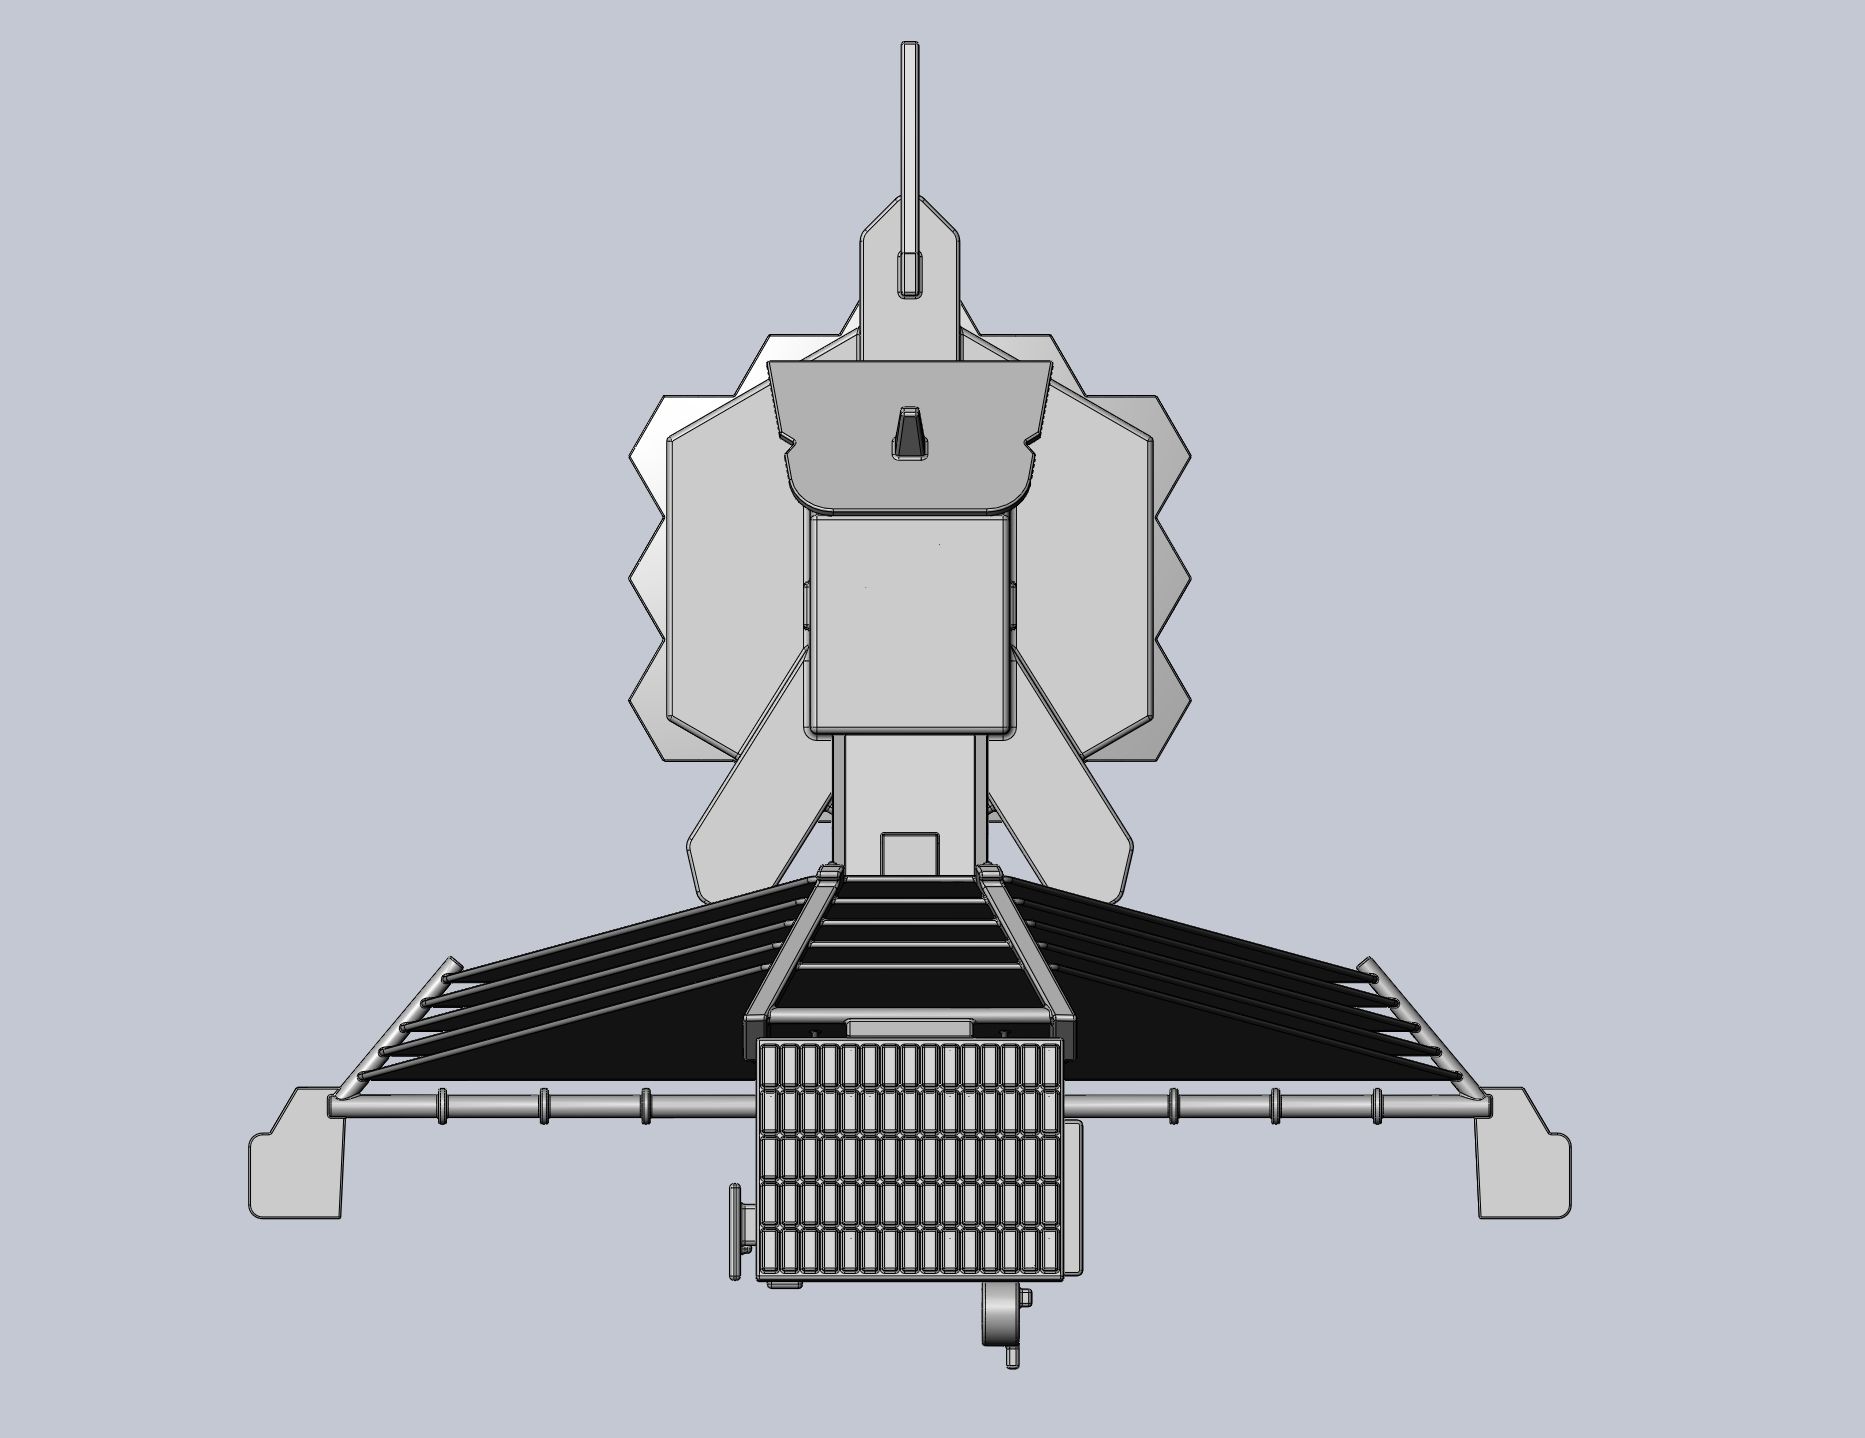 jw7.jpg Download DXF file James Webb Space Telescope JWST Basic Model • 3D printer template, julian-danzer